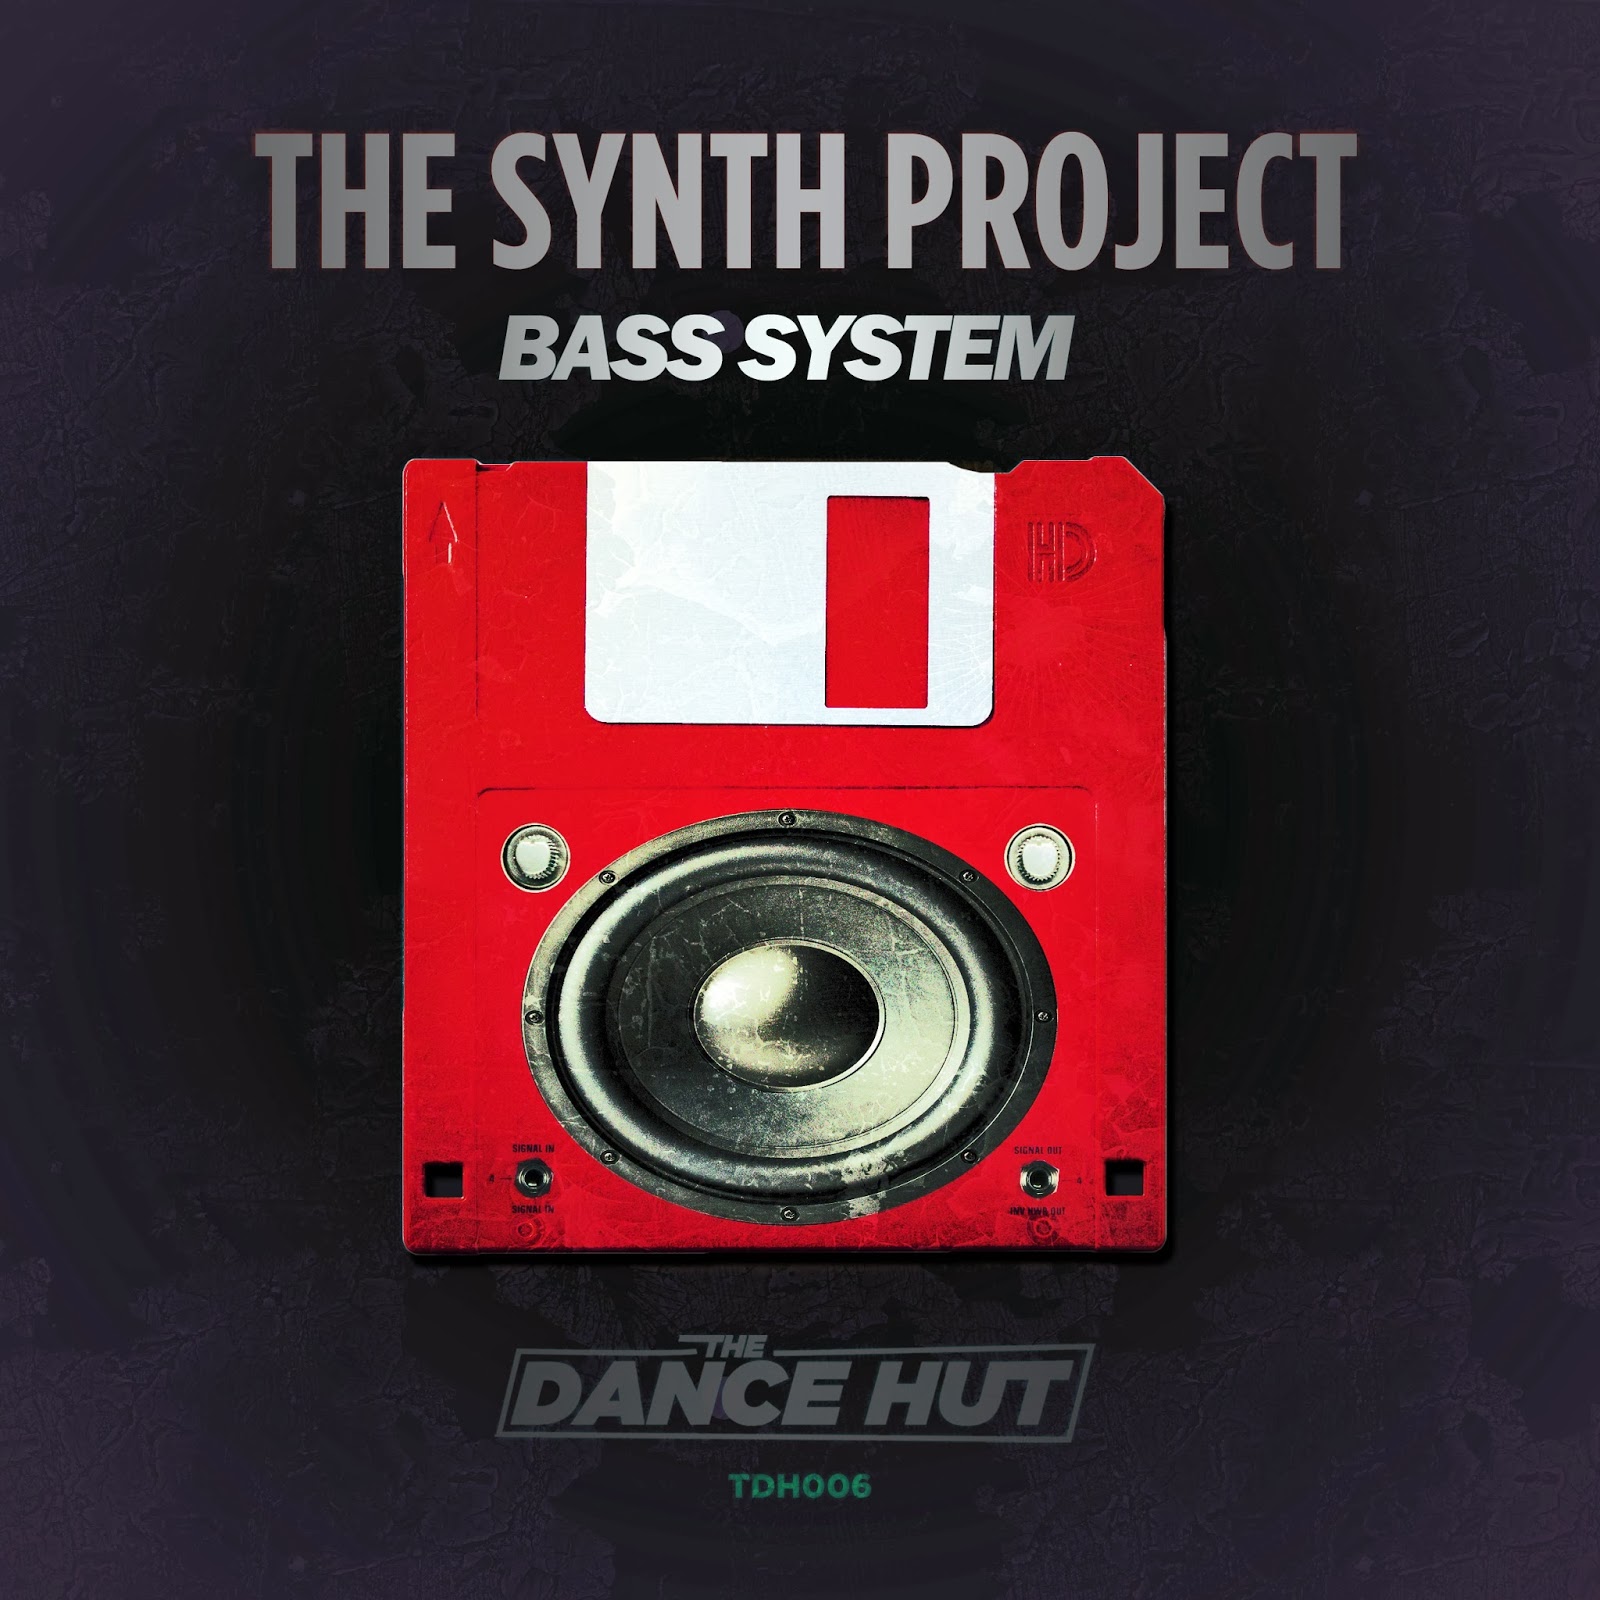 Bass System. Bass project